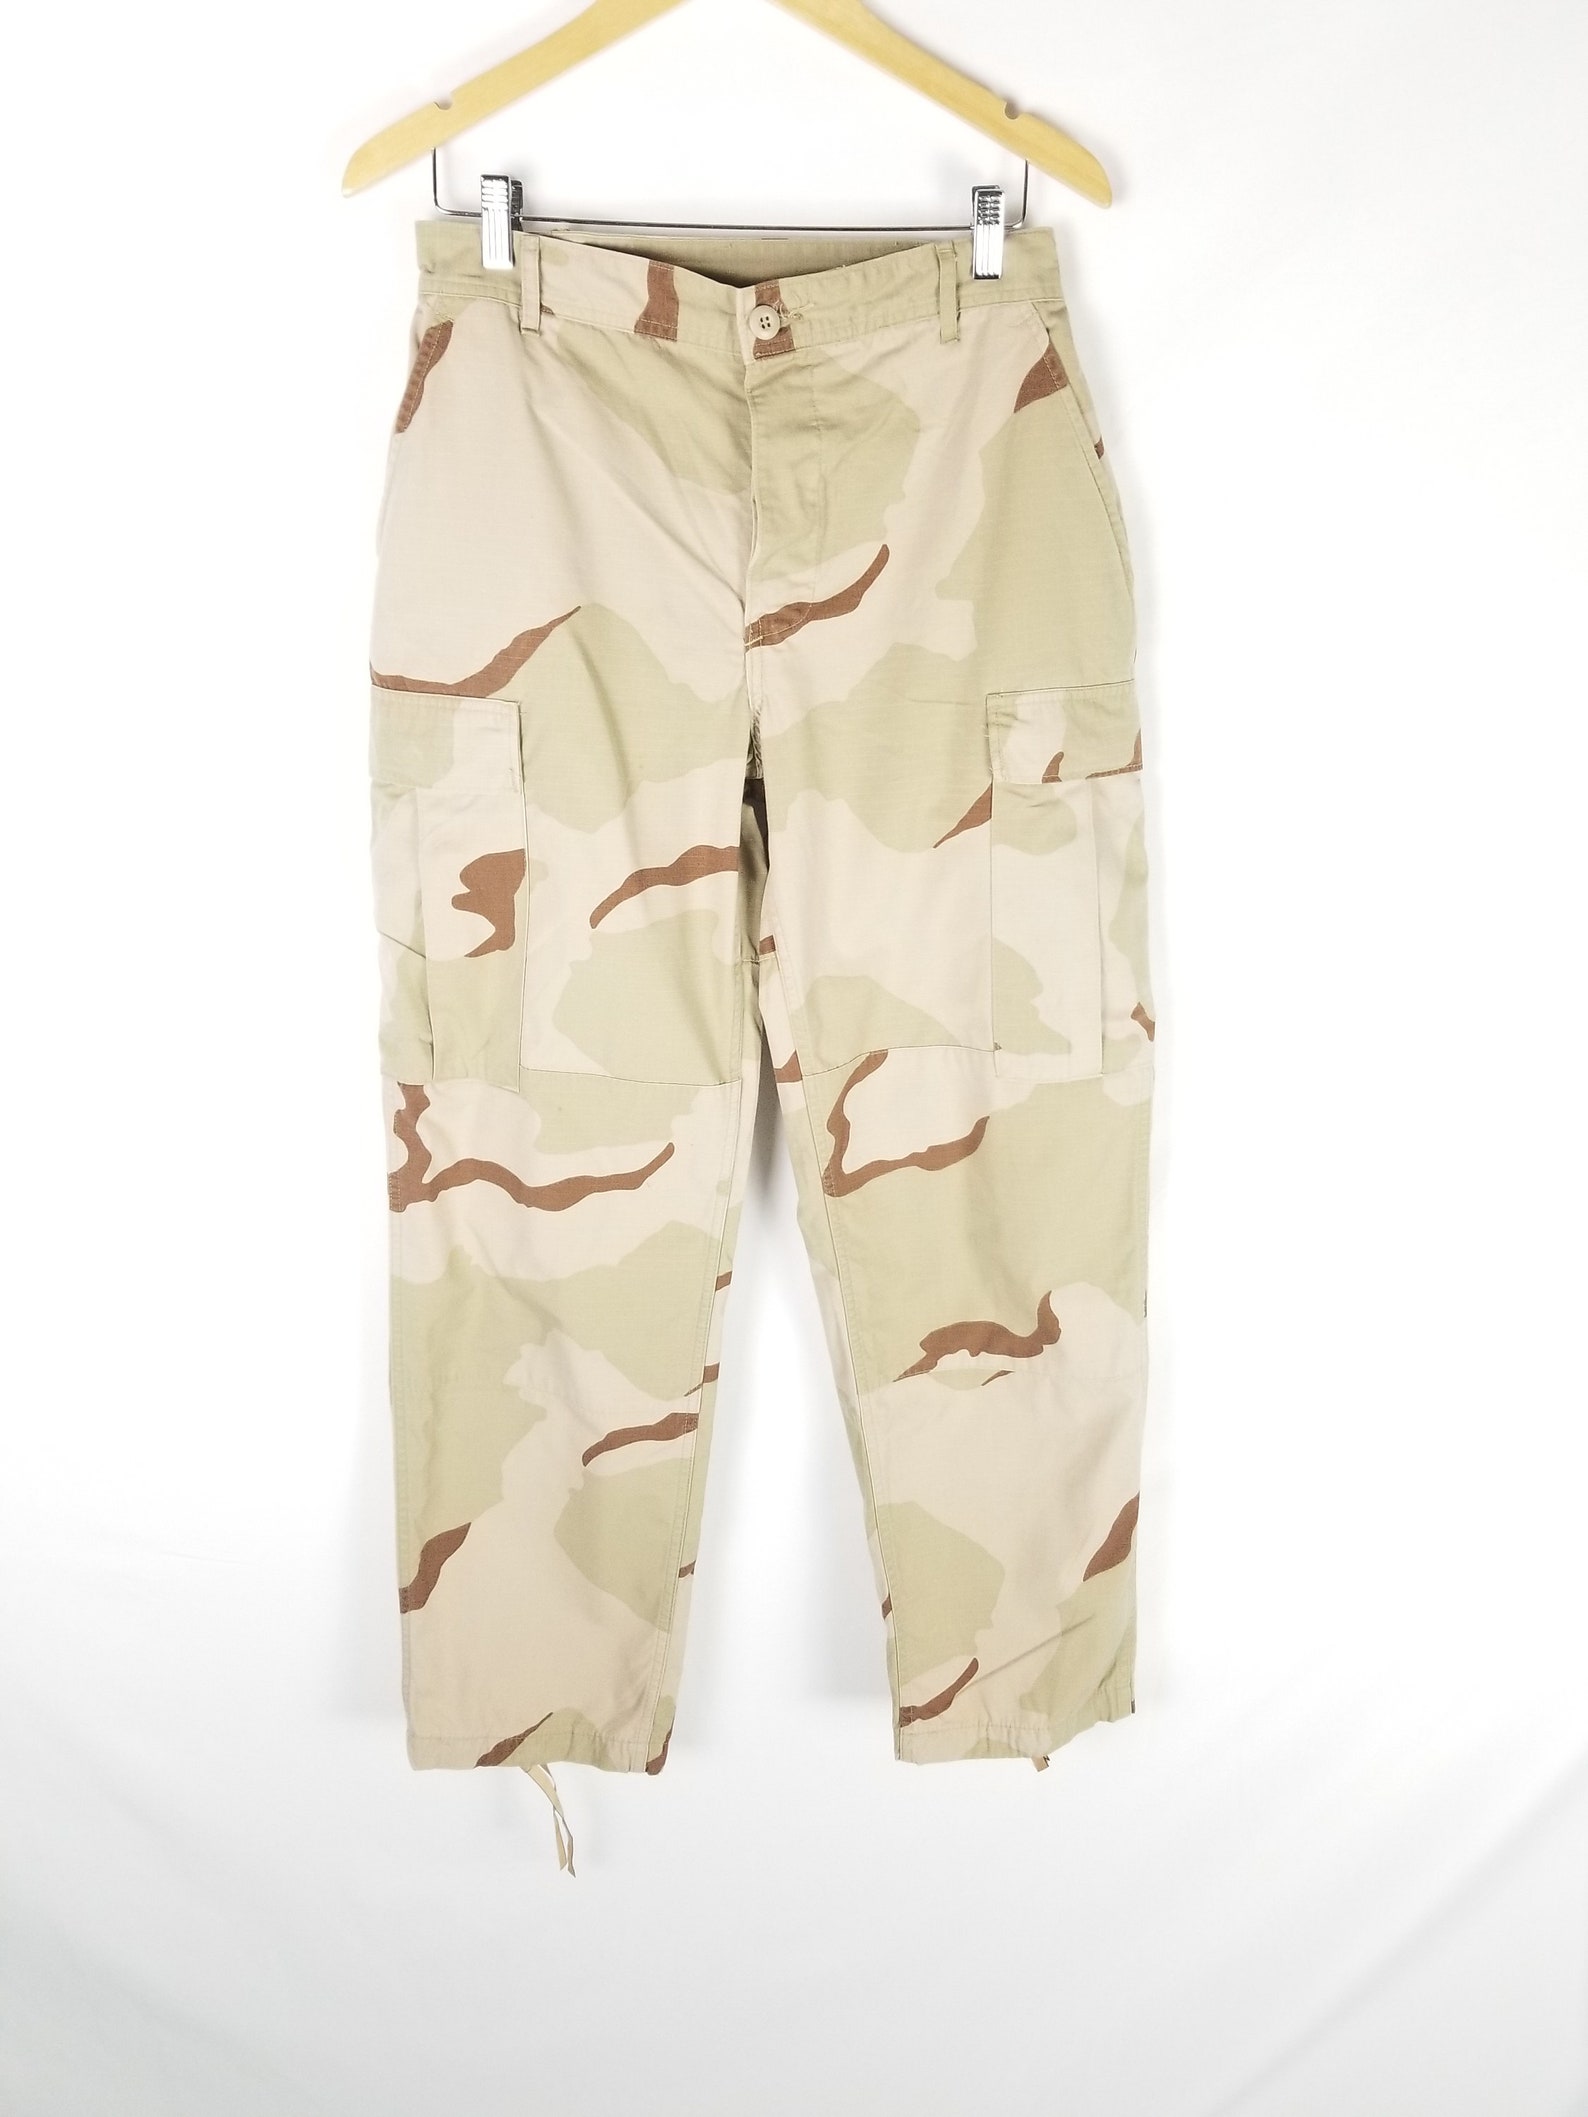 90's Army Desert Camouflage Cargo Pants Unisex Camo Pants - Etsy